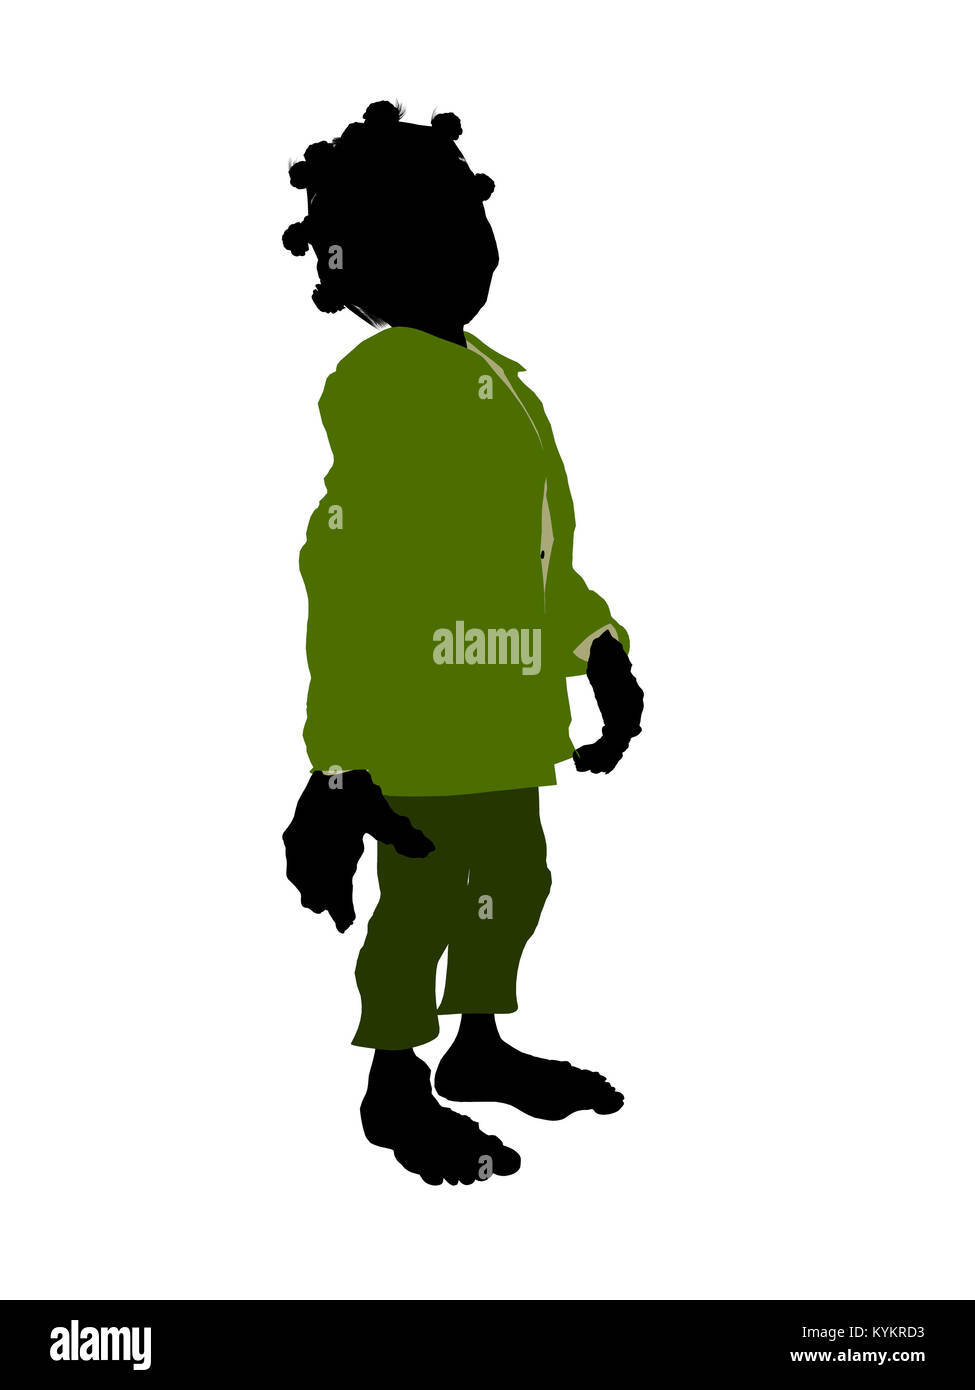 Dwarf illustration silhouette on a white background Stock Photo - Alamy